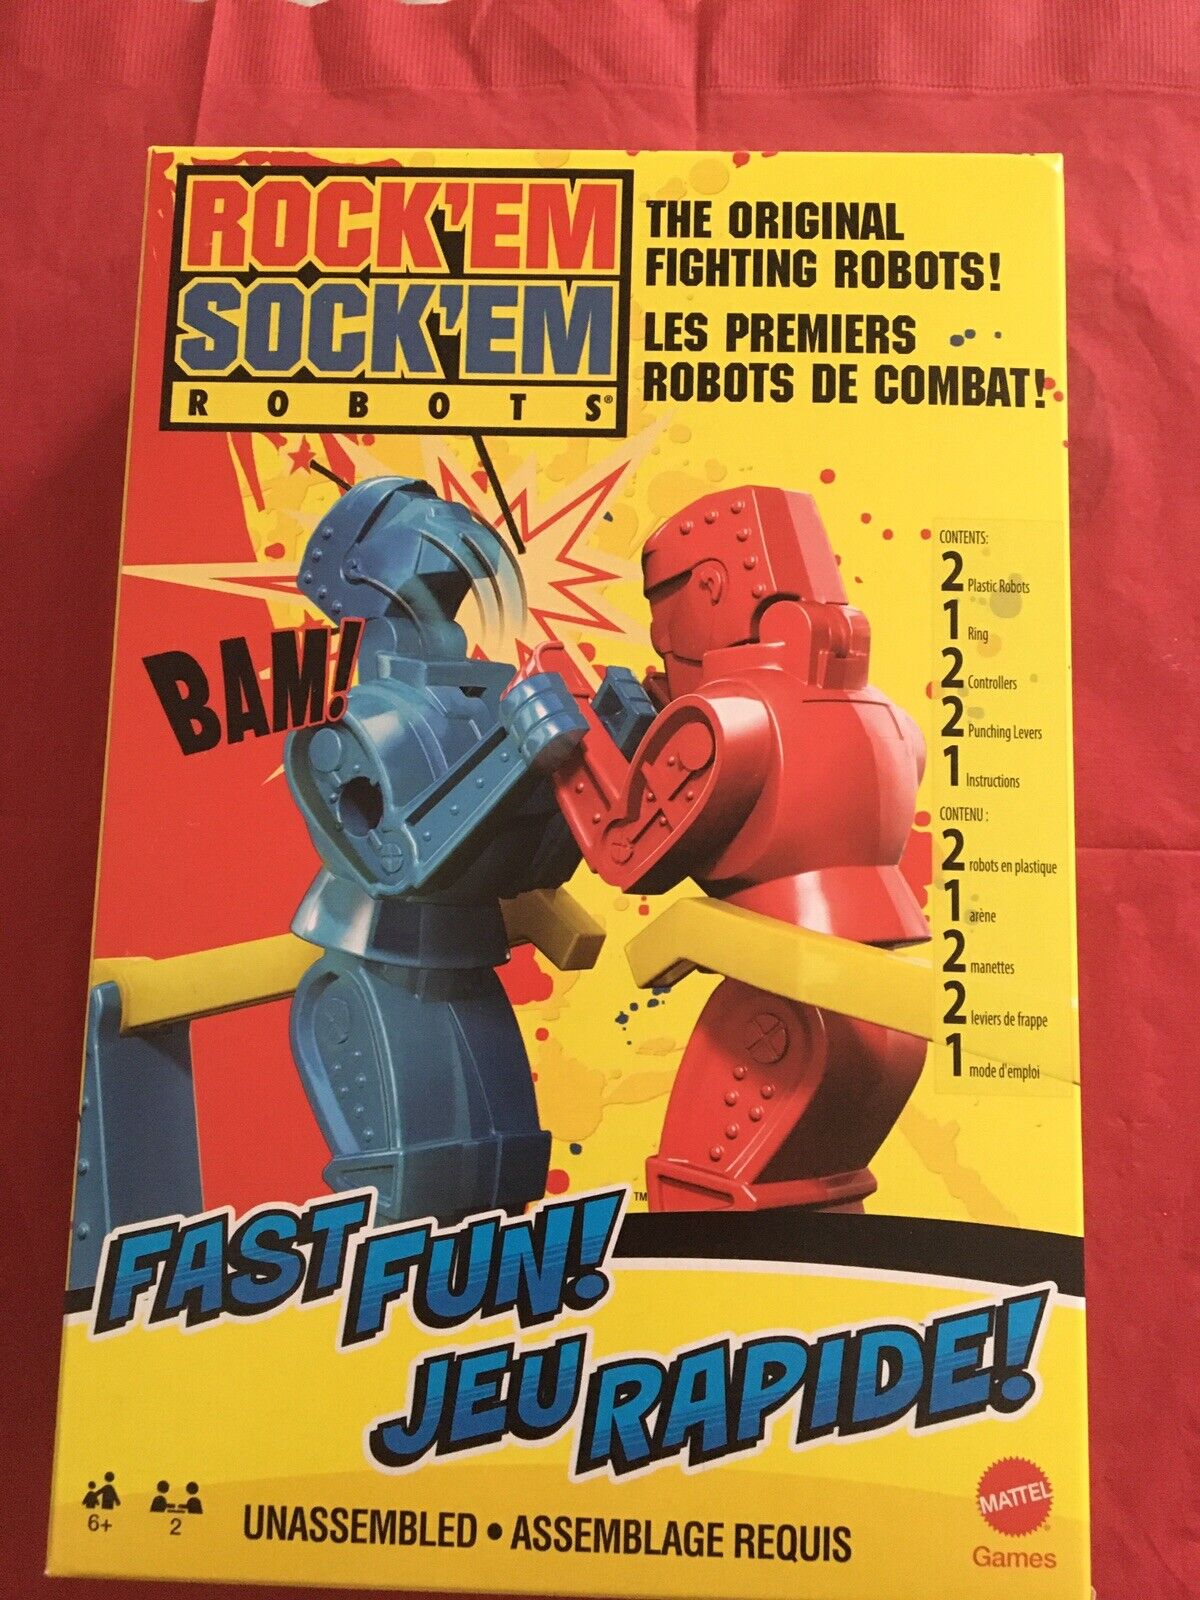 Rockem Sockem Fighting Robots Game Mattel Classic Toy, Mini. Free Shipping!!